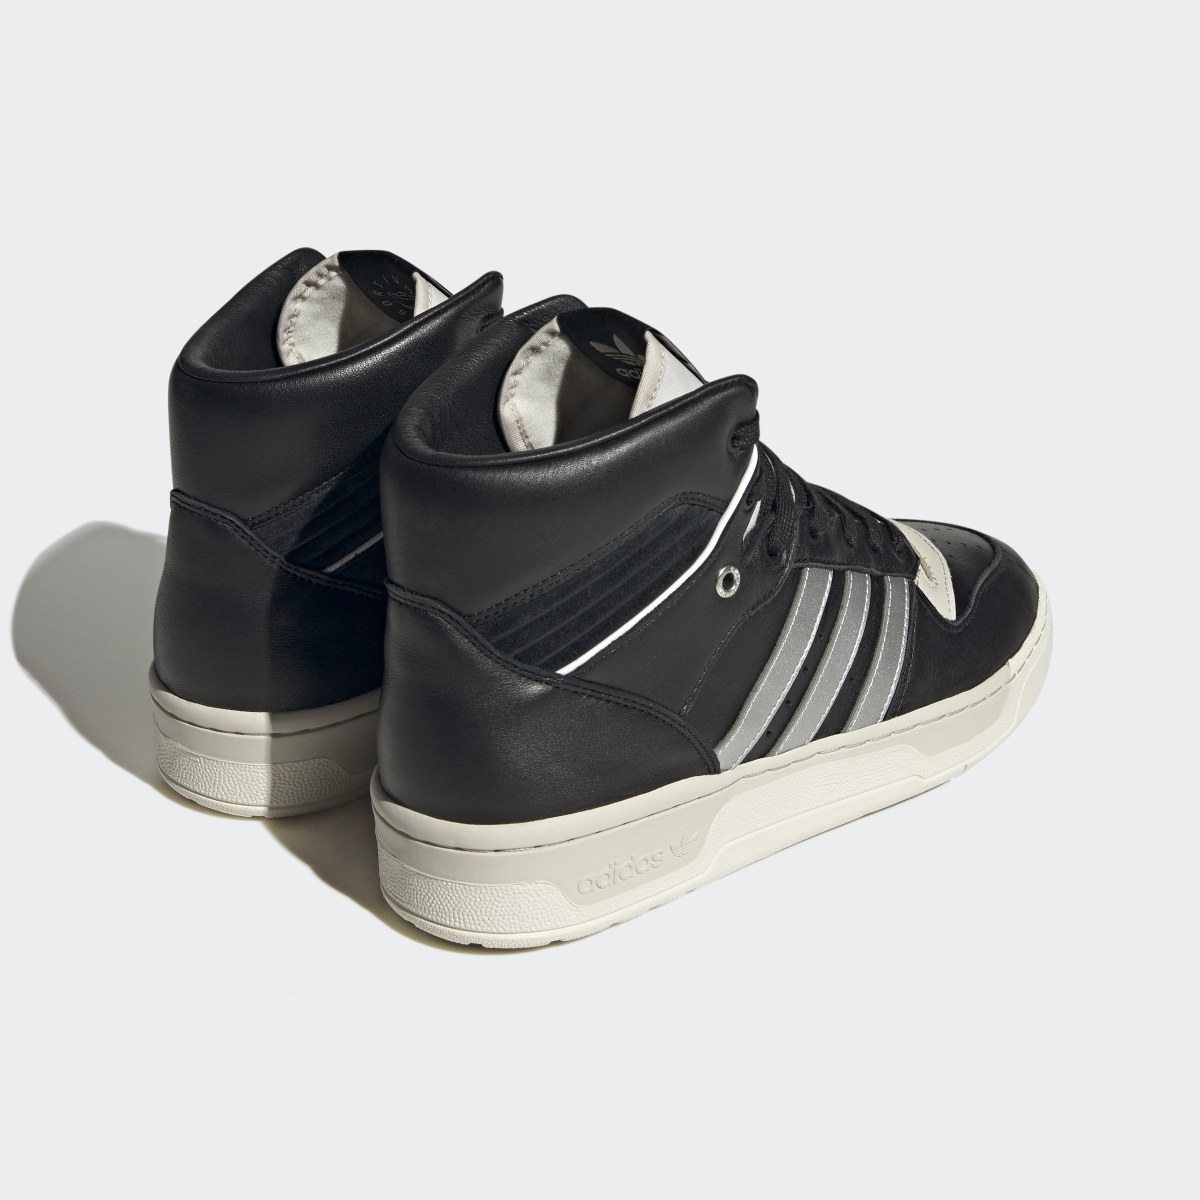 Adidas Rivalry High Consortium Shoes. 6